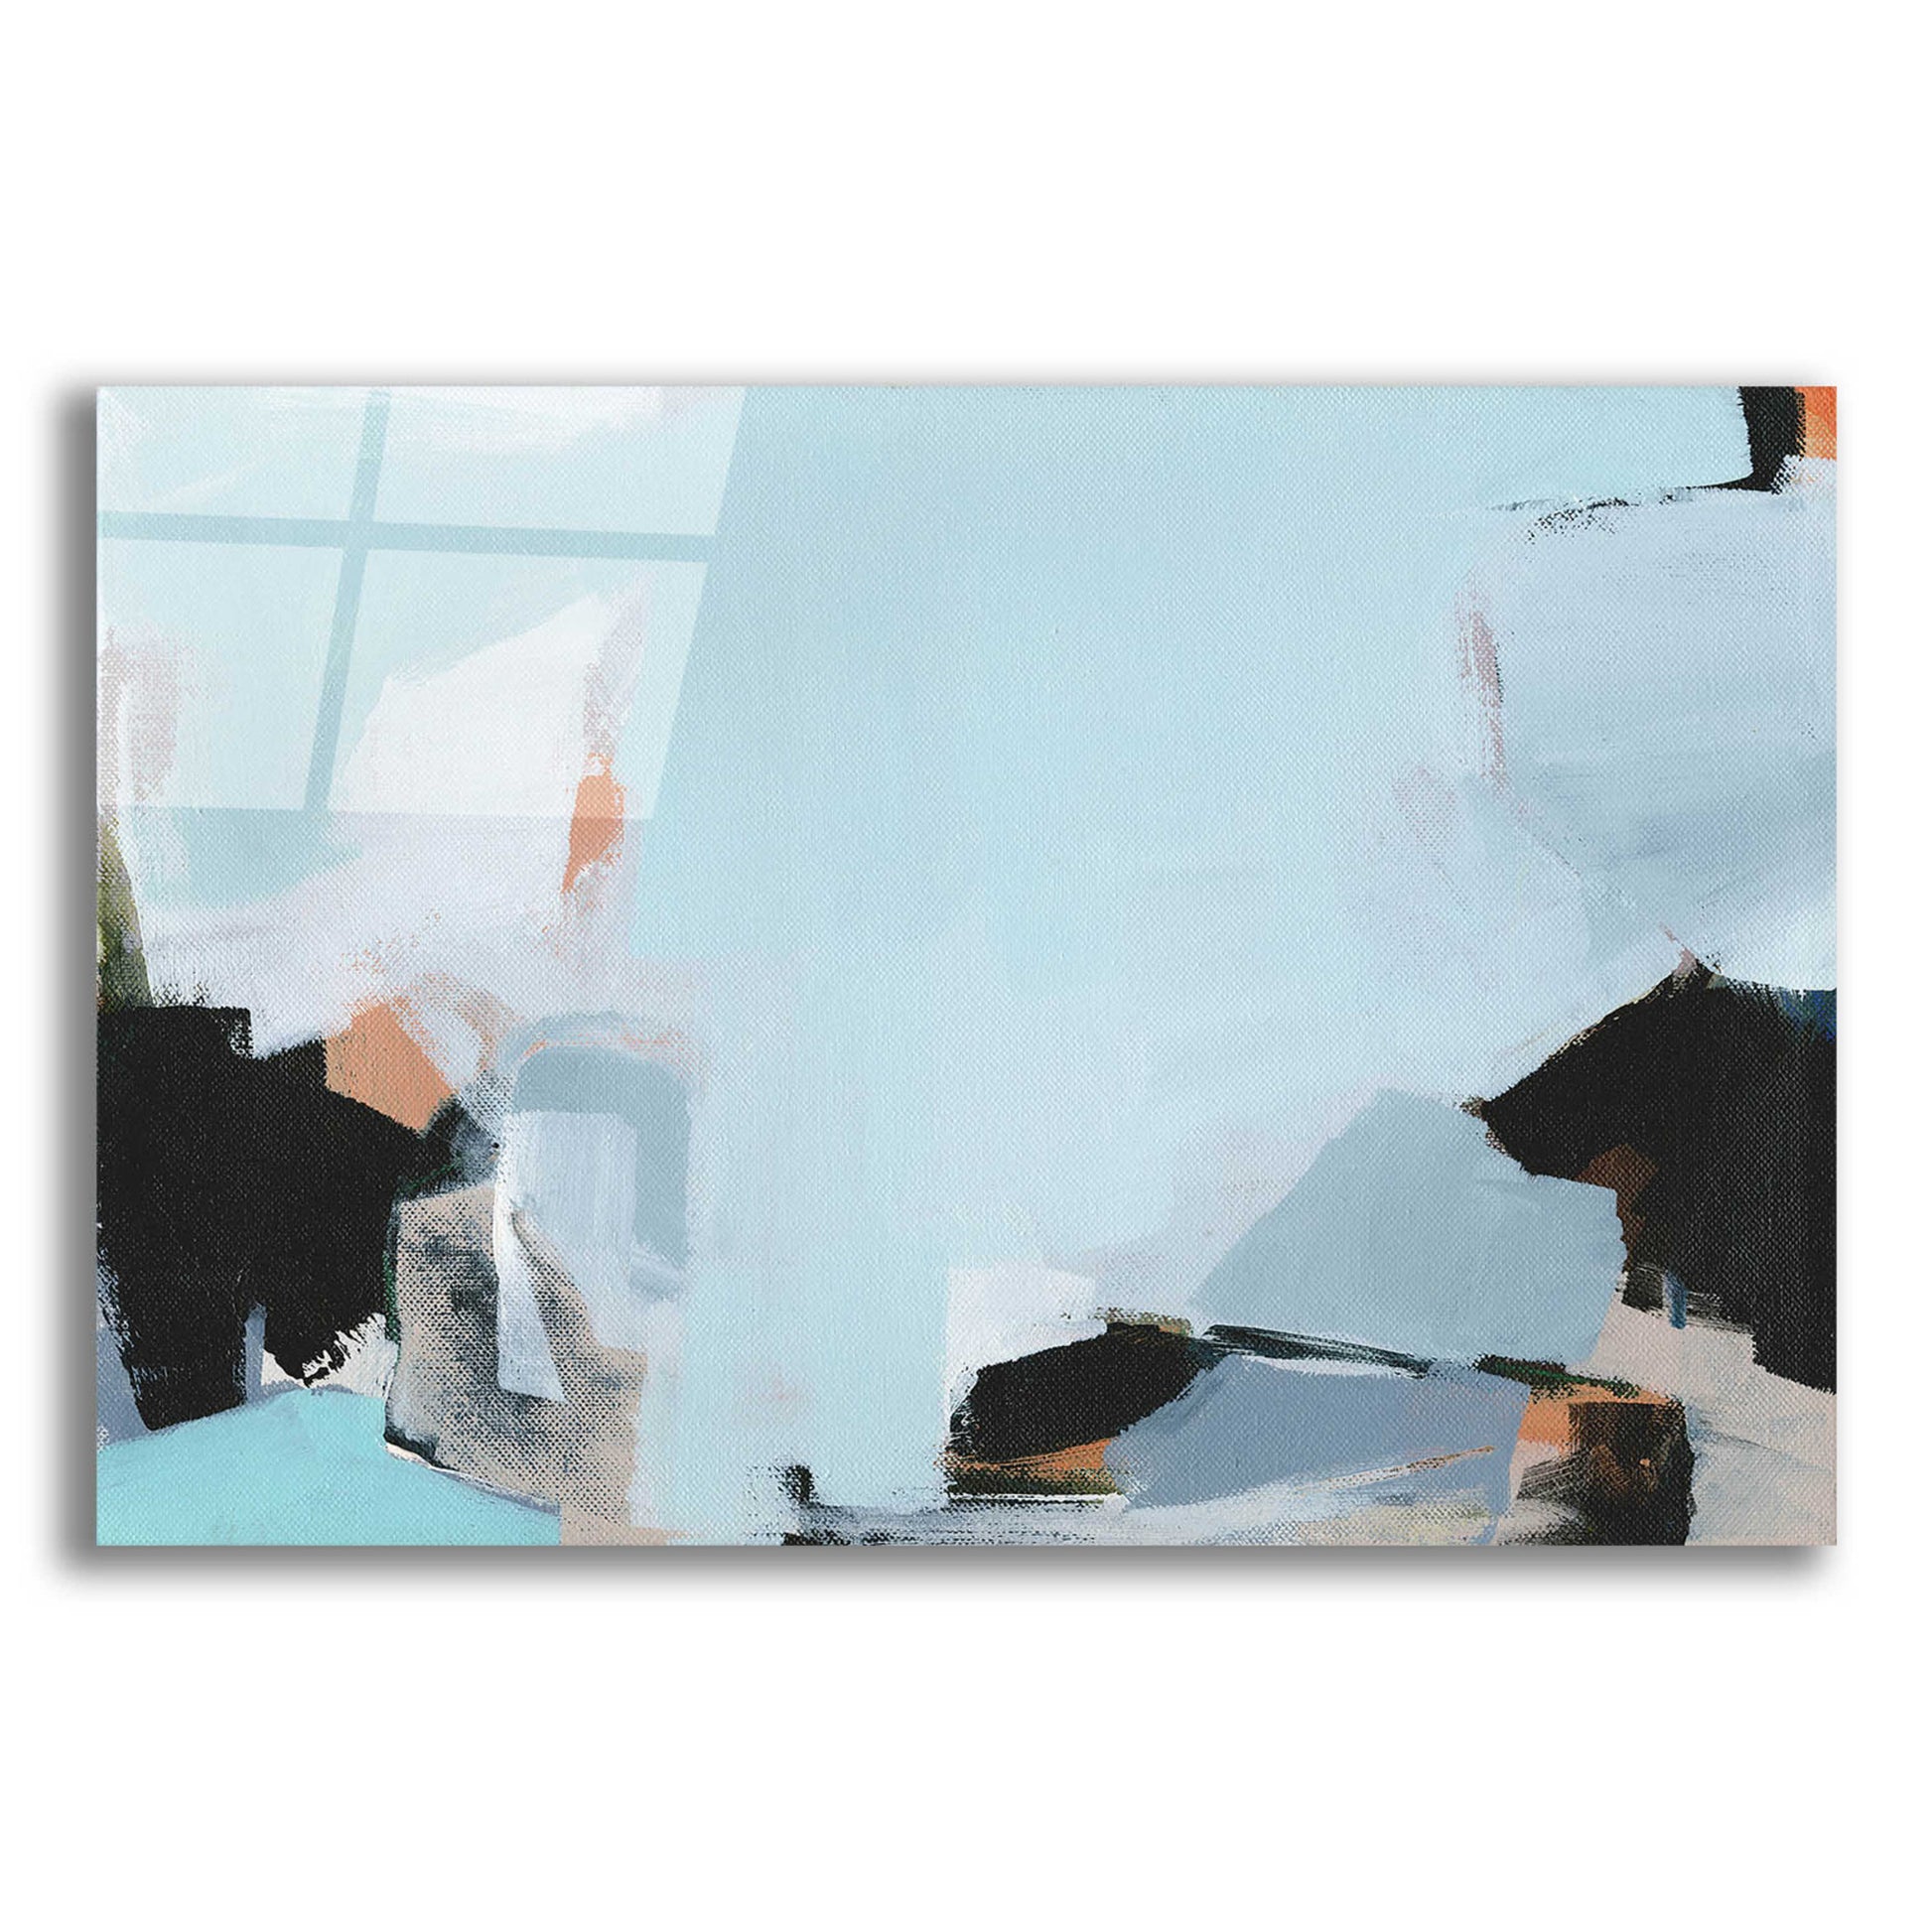 Epic Art 'Iceberg' by Amanda Hawkins, Acrylic Glass Wall Art,16x12